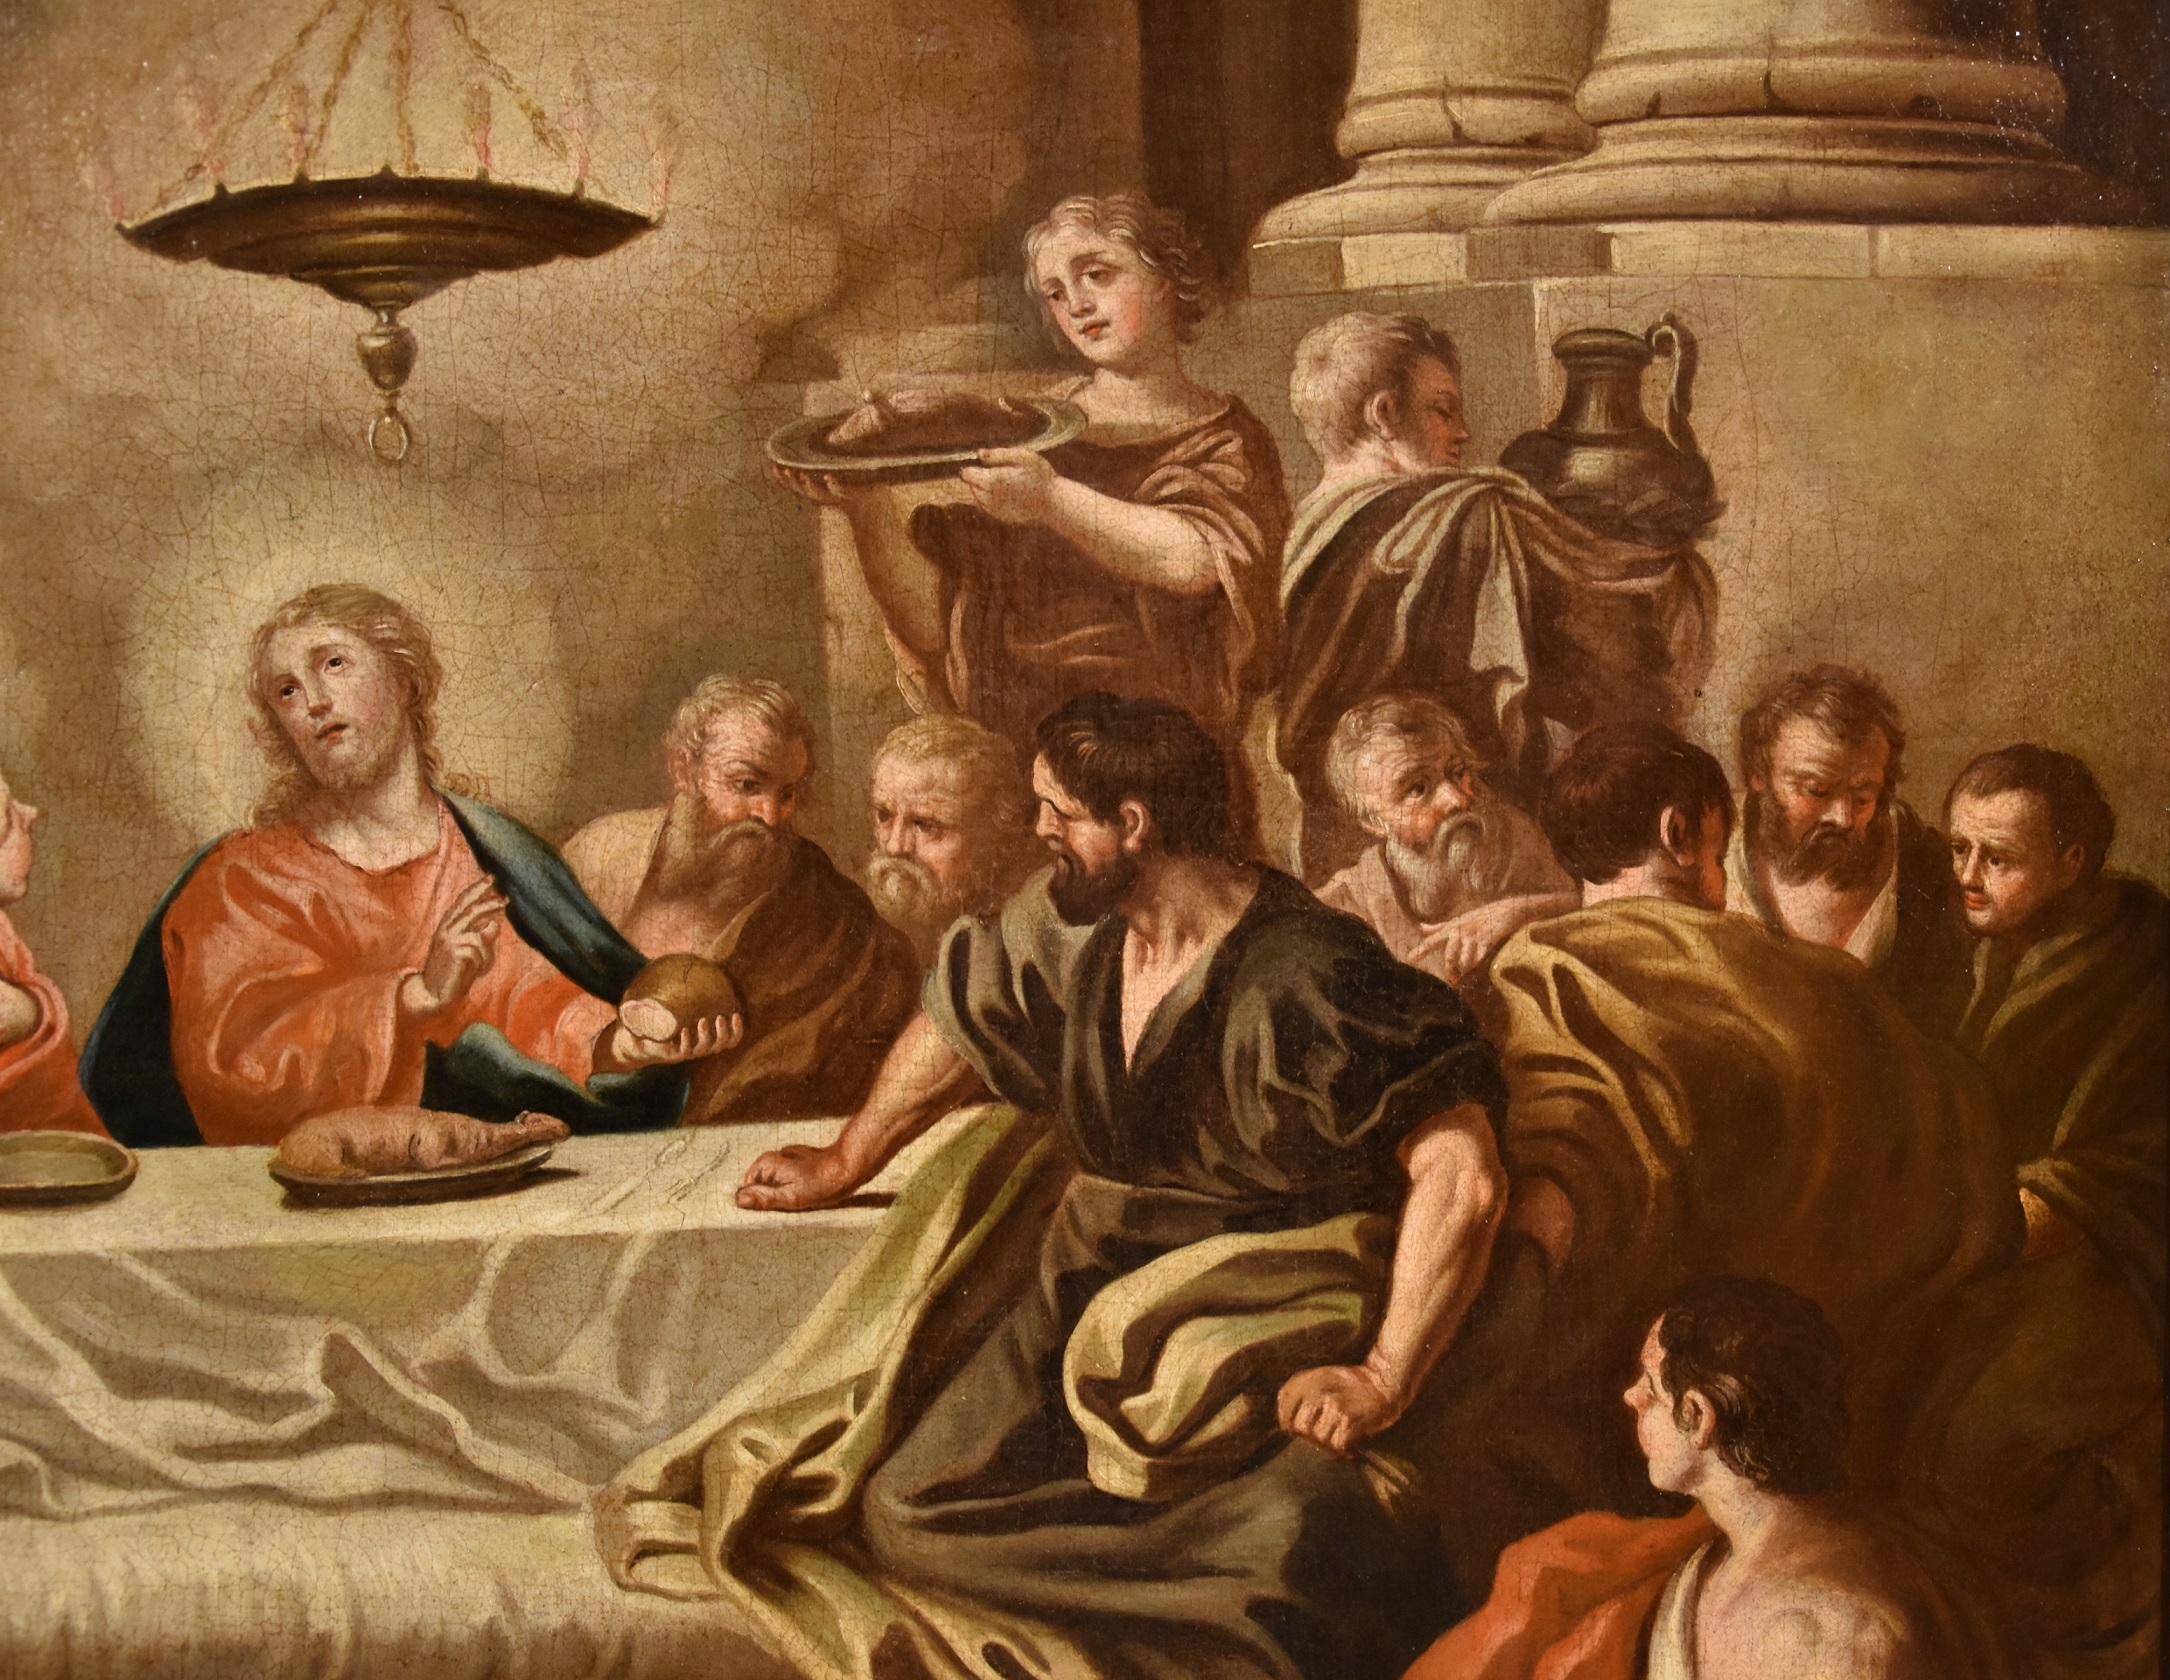 The Last Supper 
Workshop of Francesco De Mura (Naples, 1696 - Naples, 1782)
Attributable to Pietro Bardellino (Naples, 1731 - Naples, 1806)

oil painting on canvas
Dimensions: cm. 75 x 102, with frame cm. 94 x 121

Configurable as a valuable work